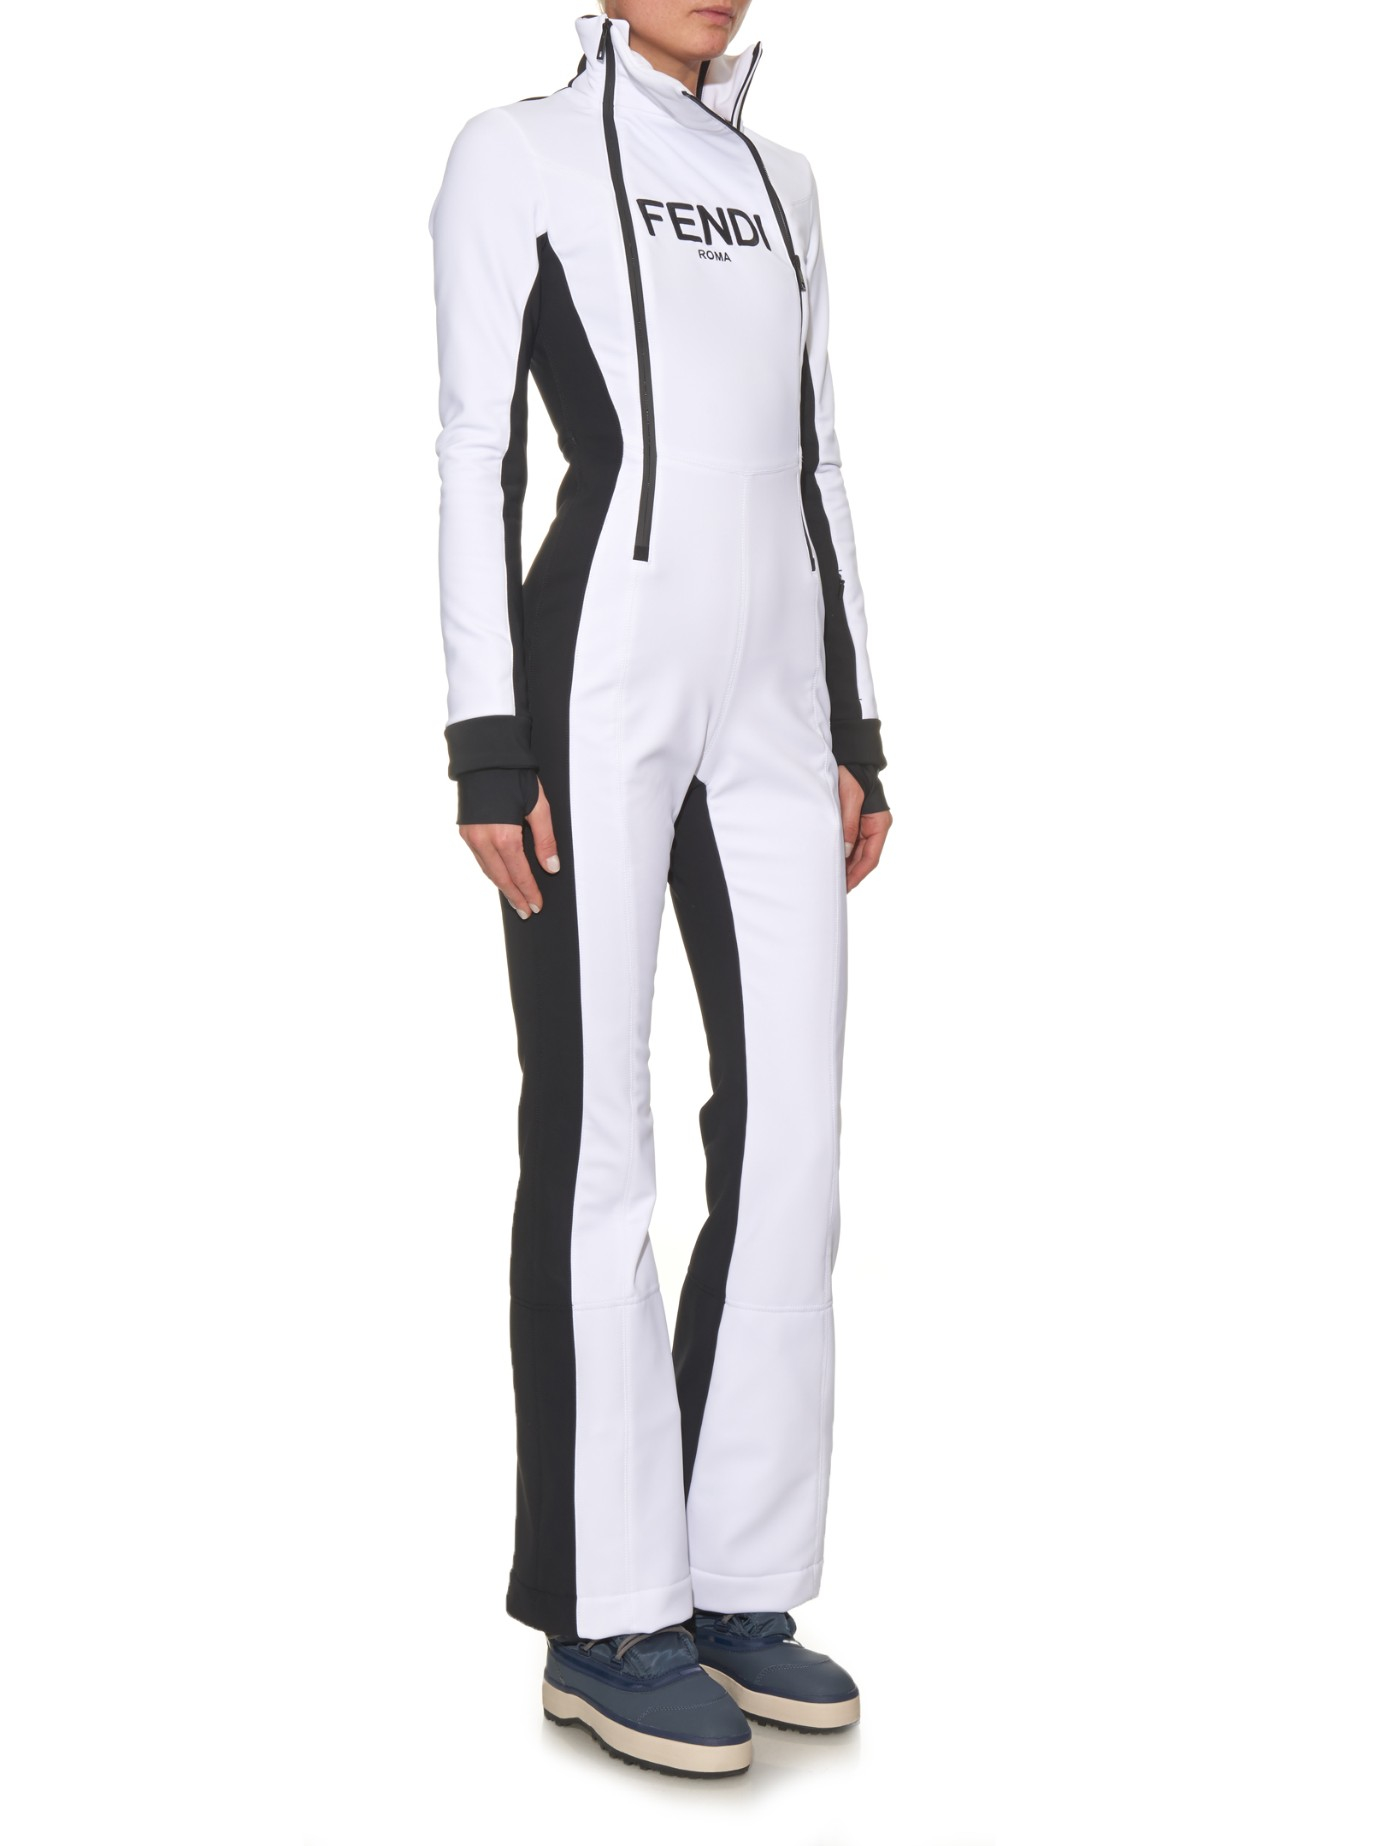 Fendi Technical Ski Jumpsuit in White Black (White) - Lyst